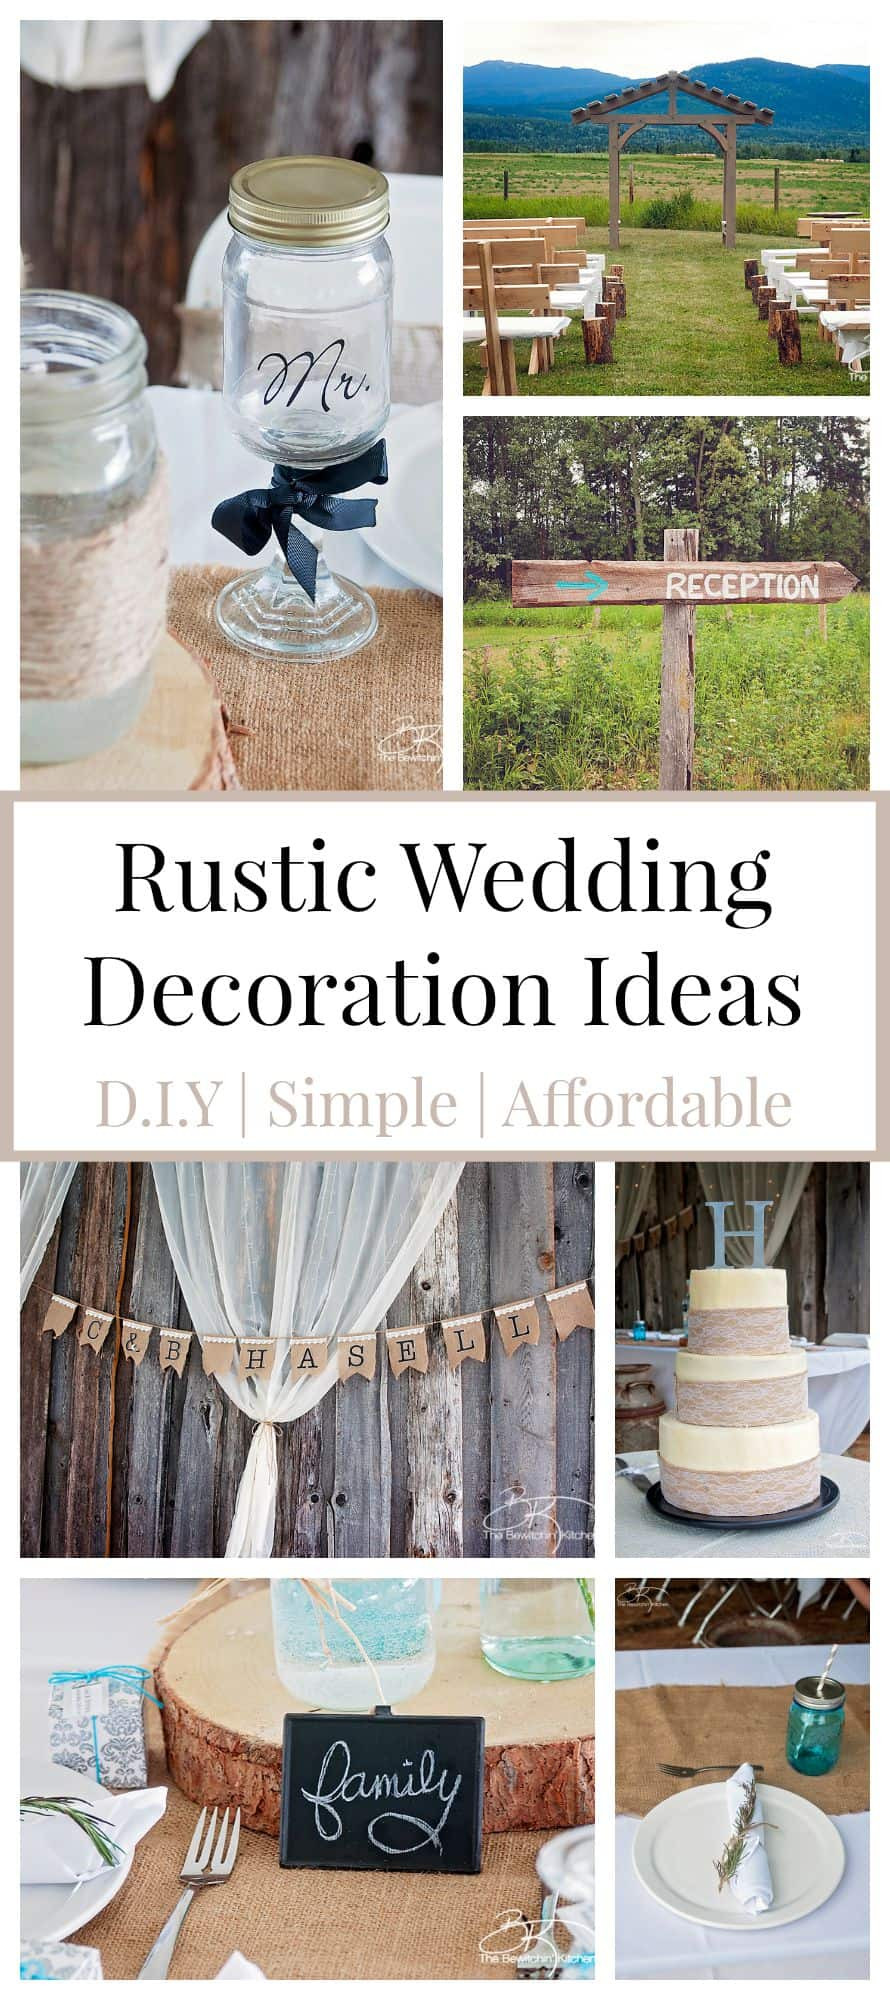 DIY Country Wedding
 Rustic Wedding Ideas That Are DIY & Affordable